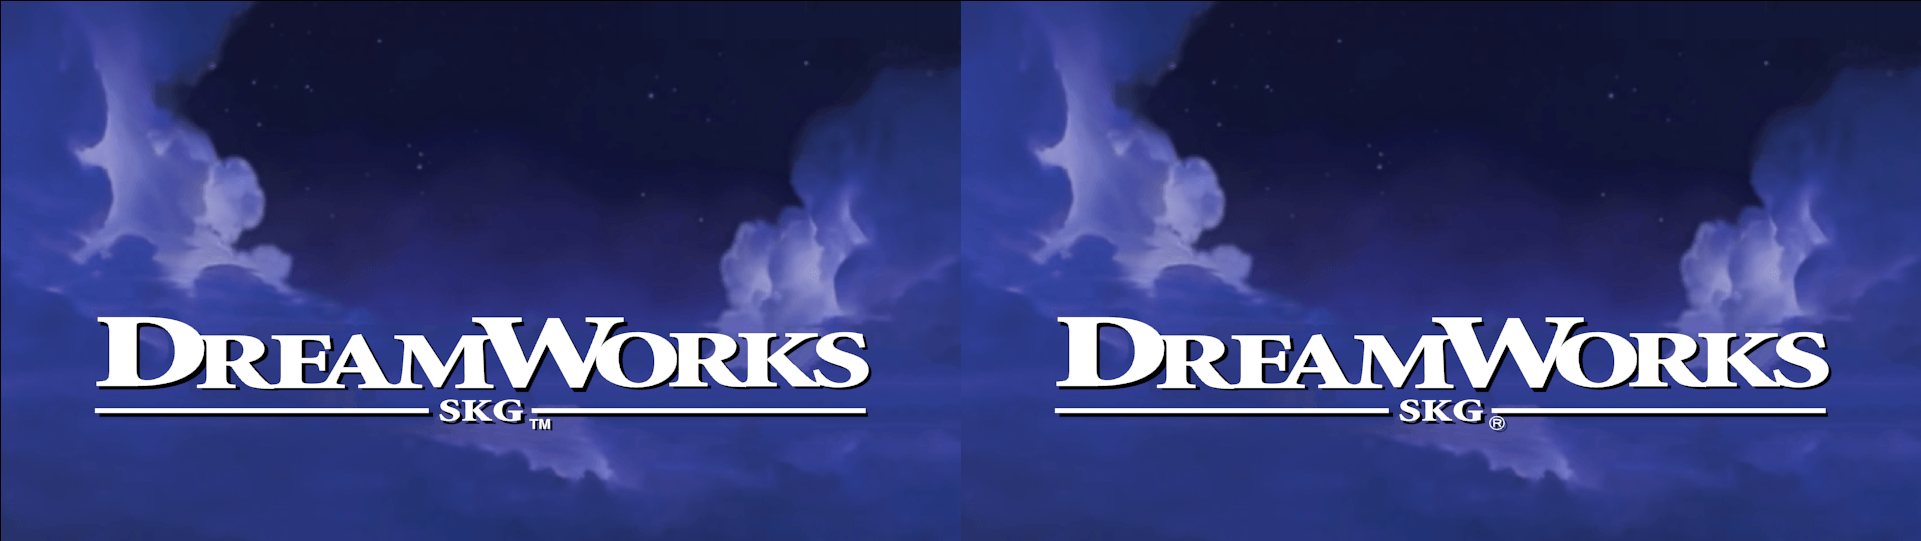 DreamWorks Television Logo - Dreamworks Logos